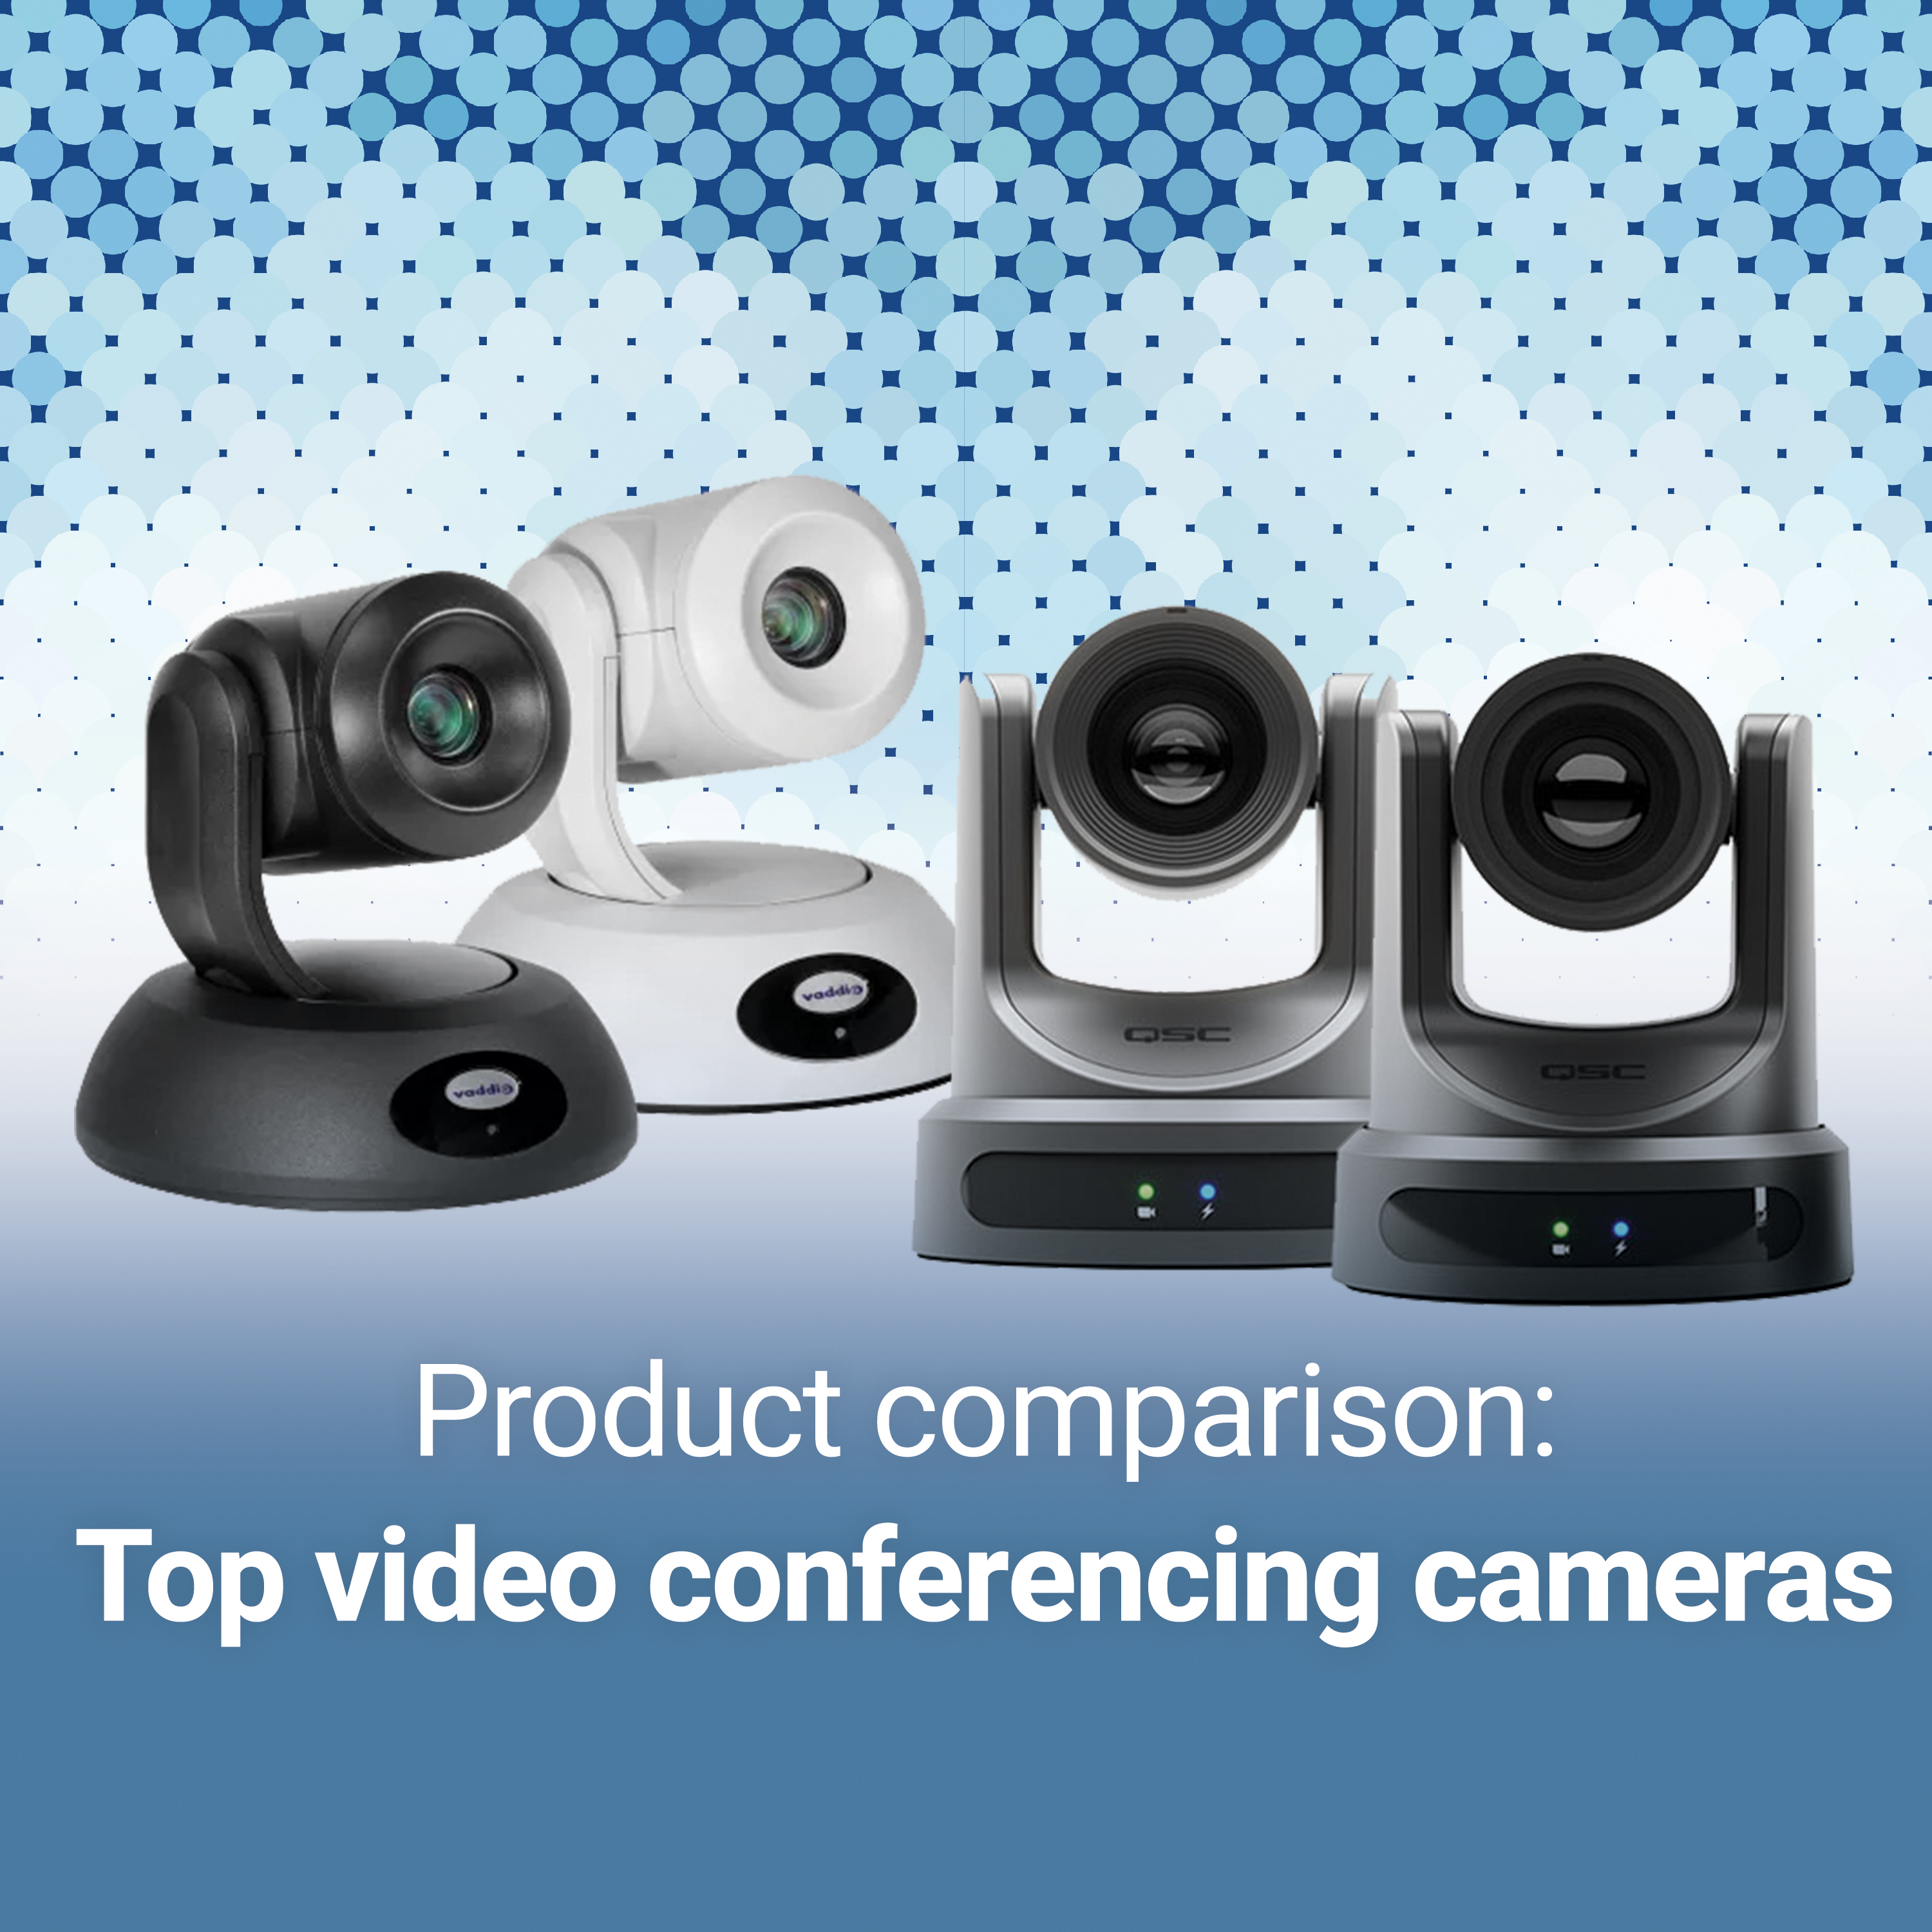 Product Comparison: Top Video Conferencing Cameras